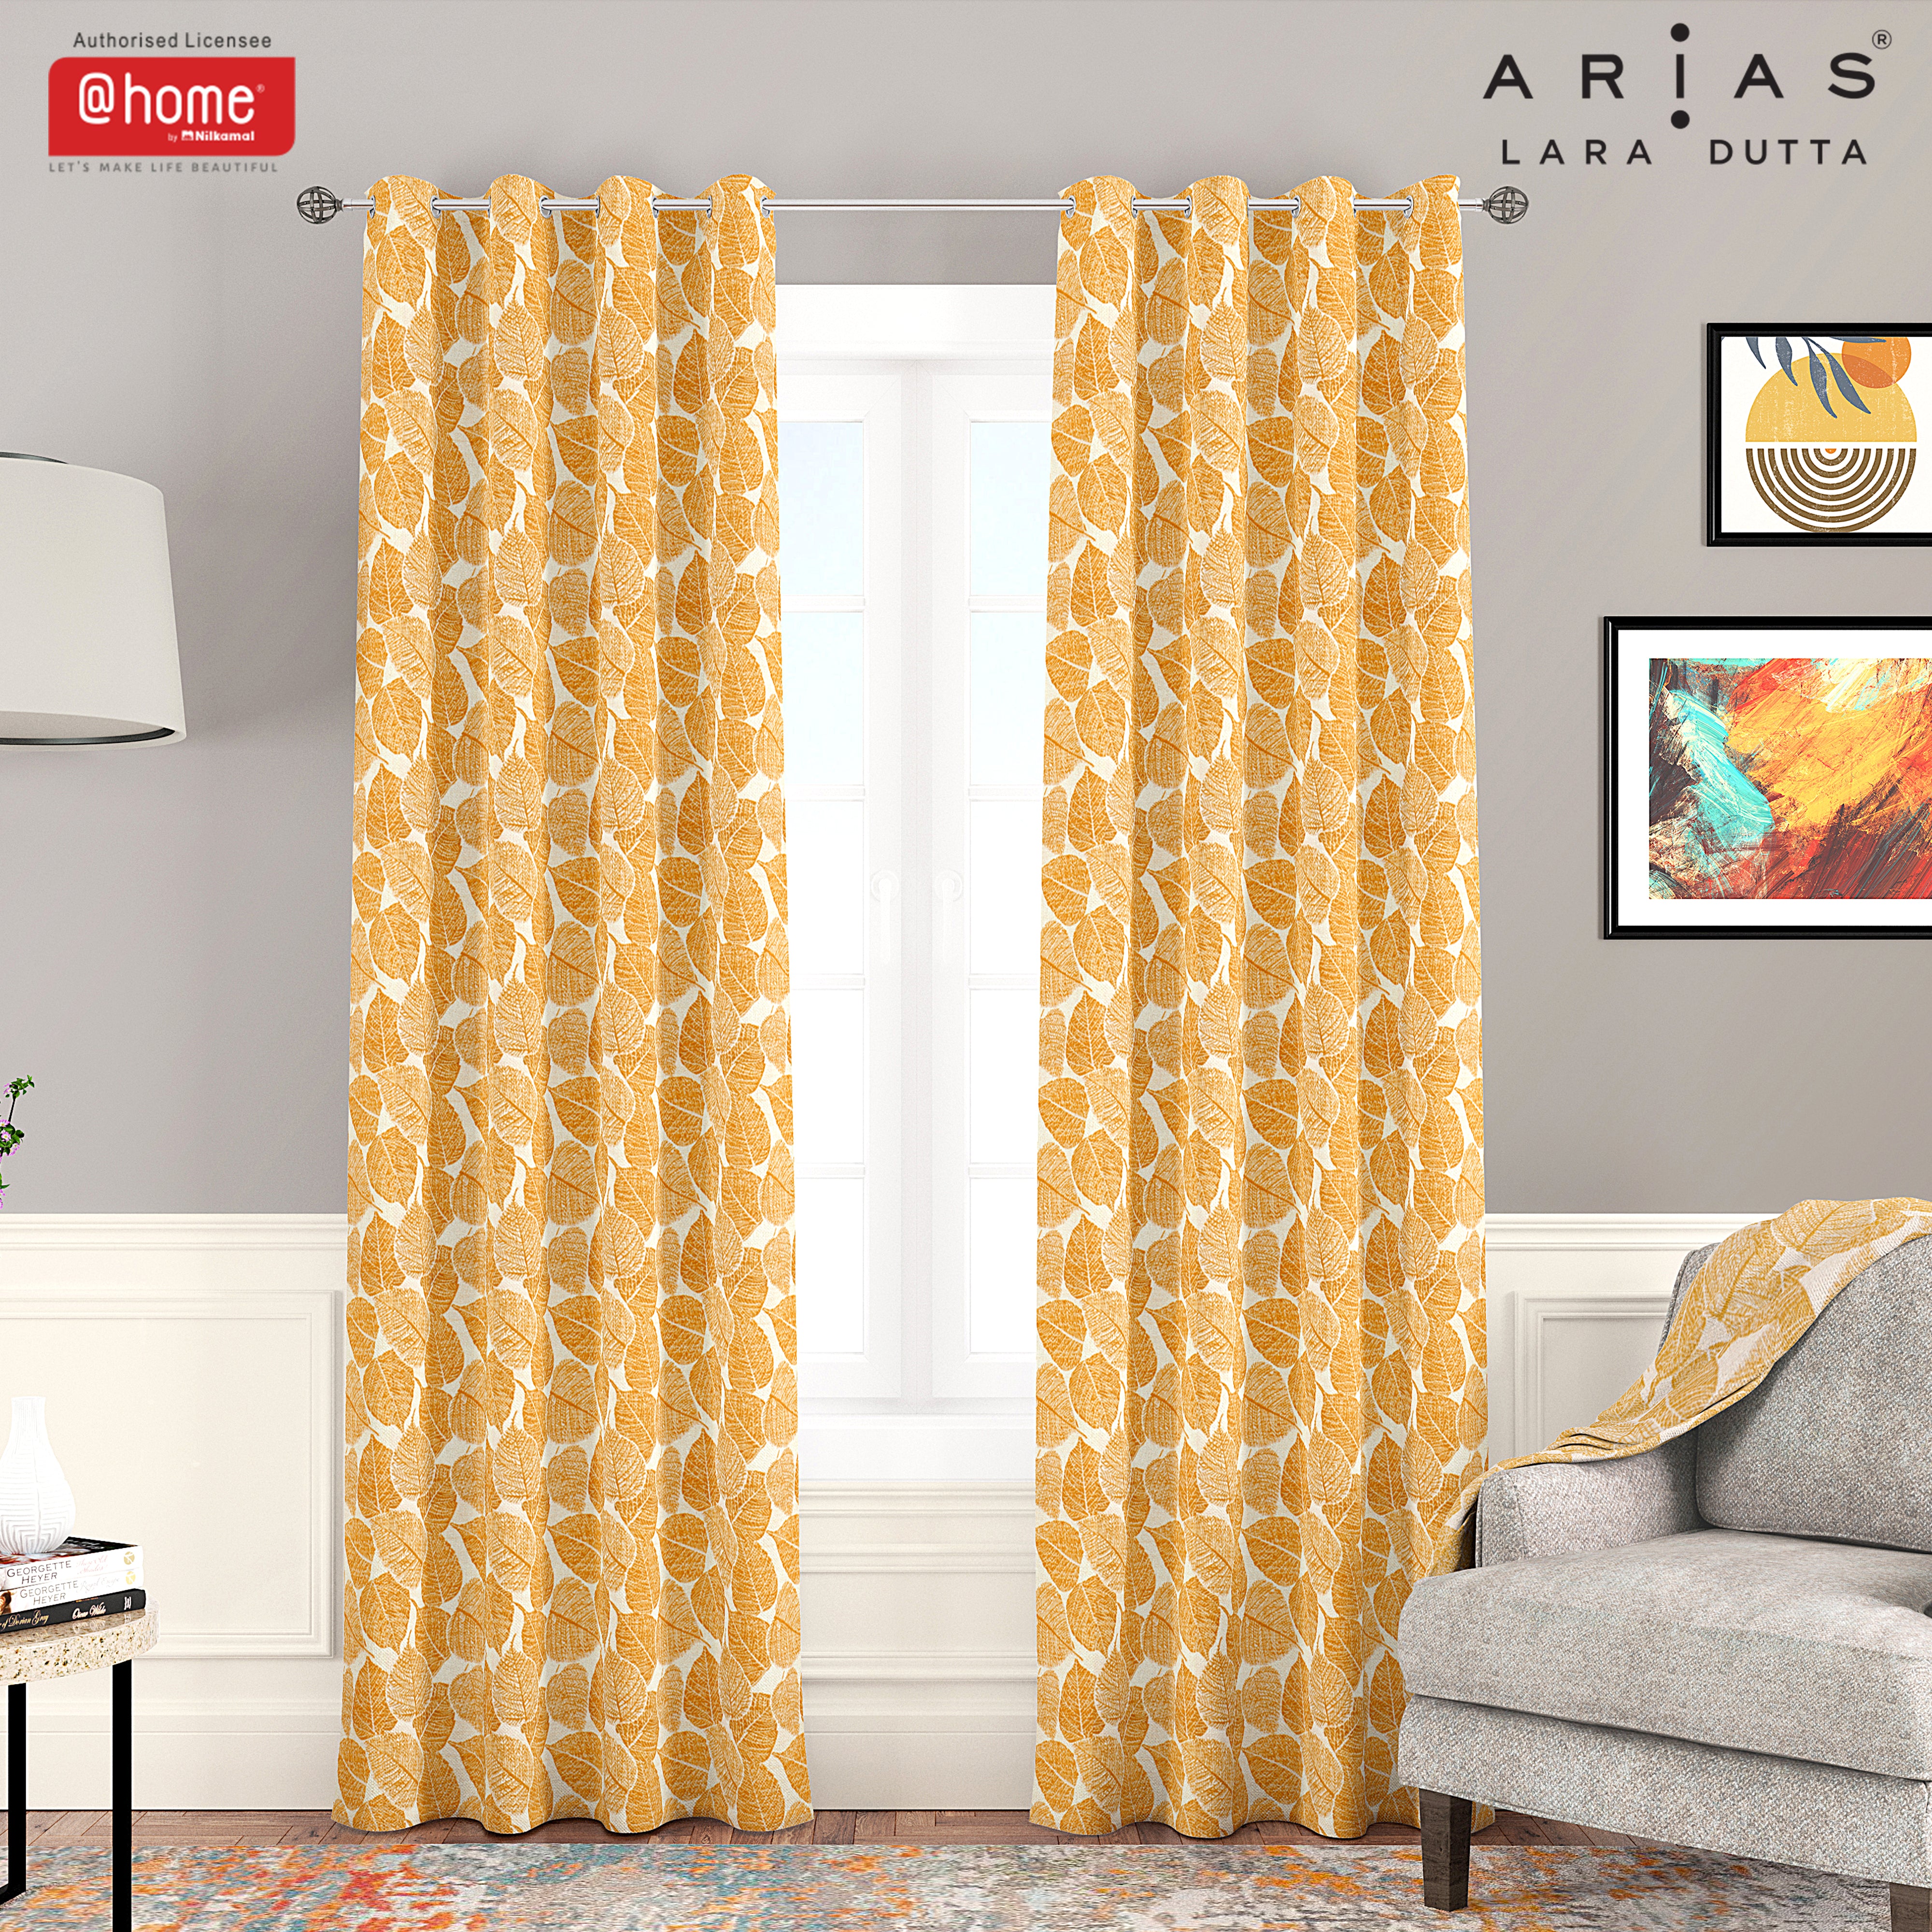 Arias Luxuria Jacquard Leaf 7 Ft Polyester Door Curtain Set of 2 (Mustard)